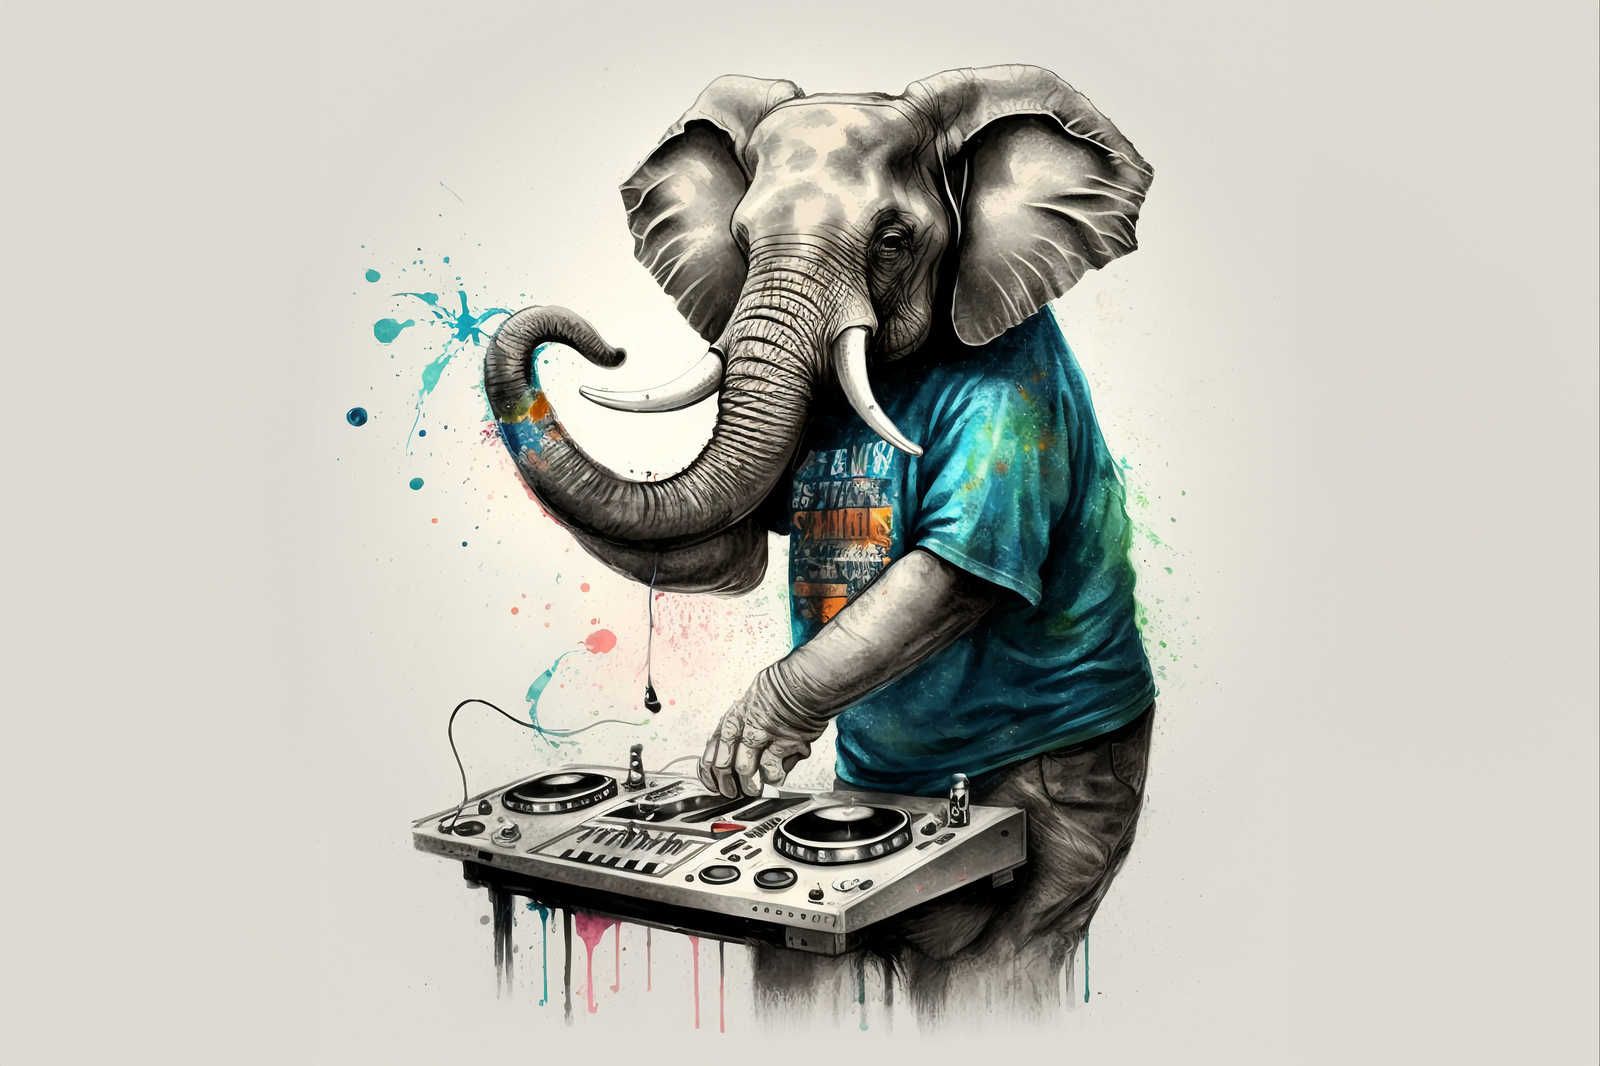             KI-Leinwandbild »elephant dj« – 90 cm x 60 cm
        